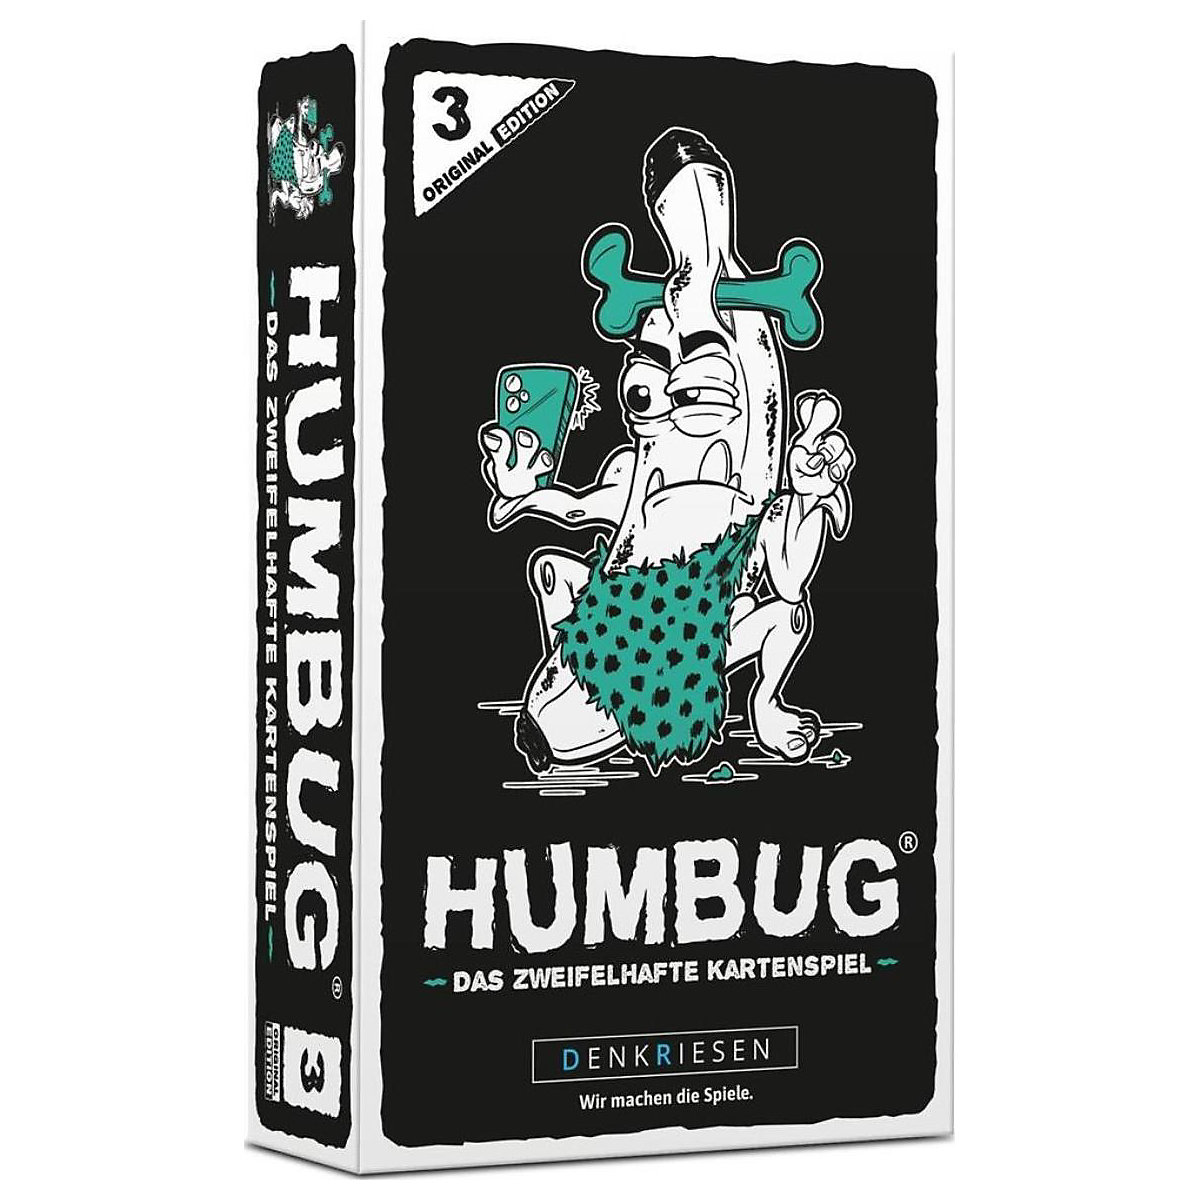 HUMBUG Original Edition Nr 3 Das zweifelhafte Kartenspie